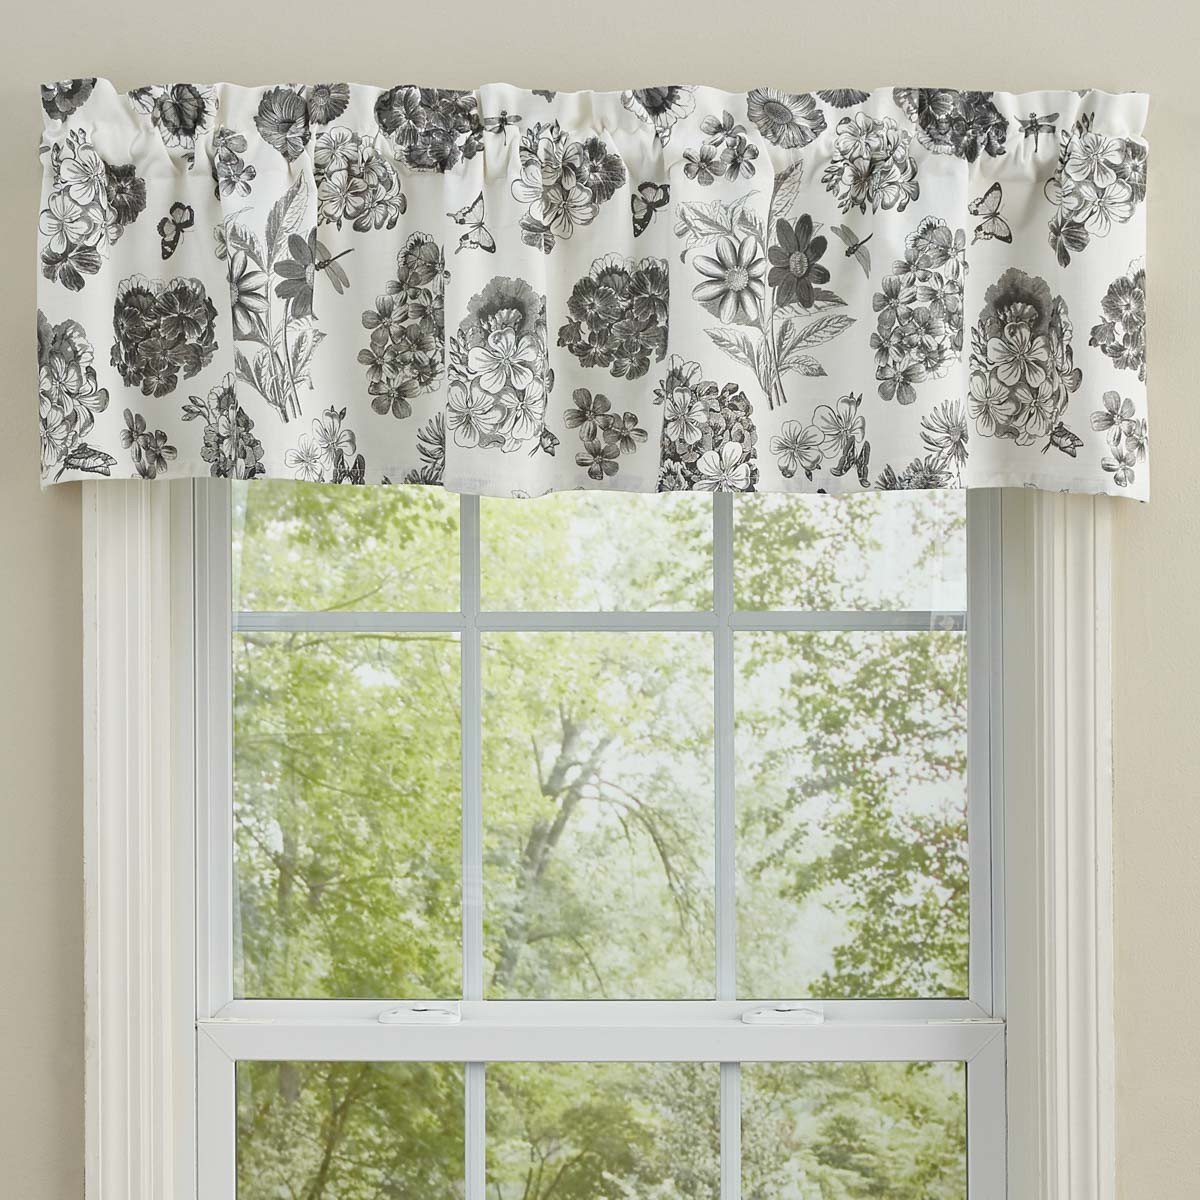 Park Designs Geranium Unlined Window Floral Valance 60 x 14 Inches Gray, Charcoal, etc - Olde Church Emporium